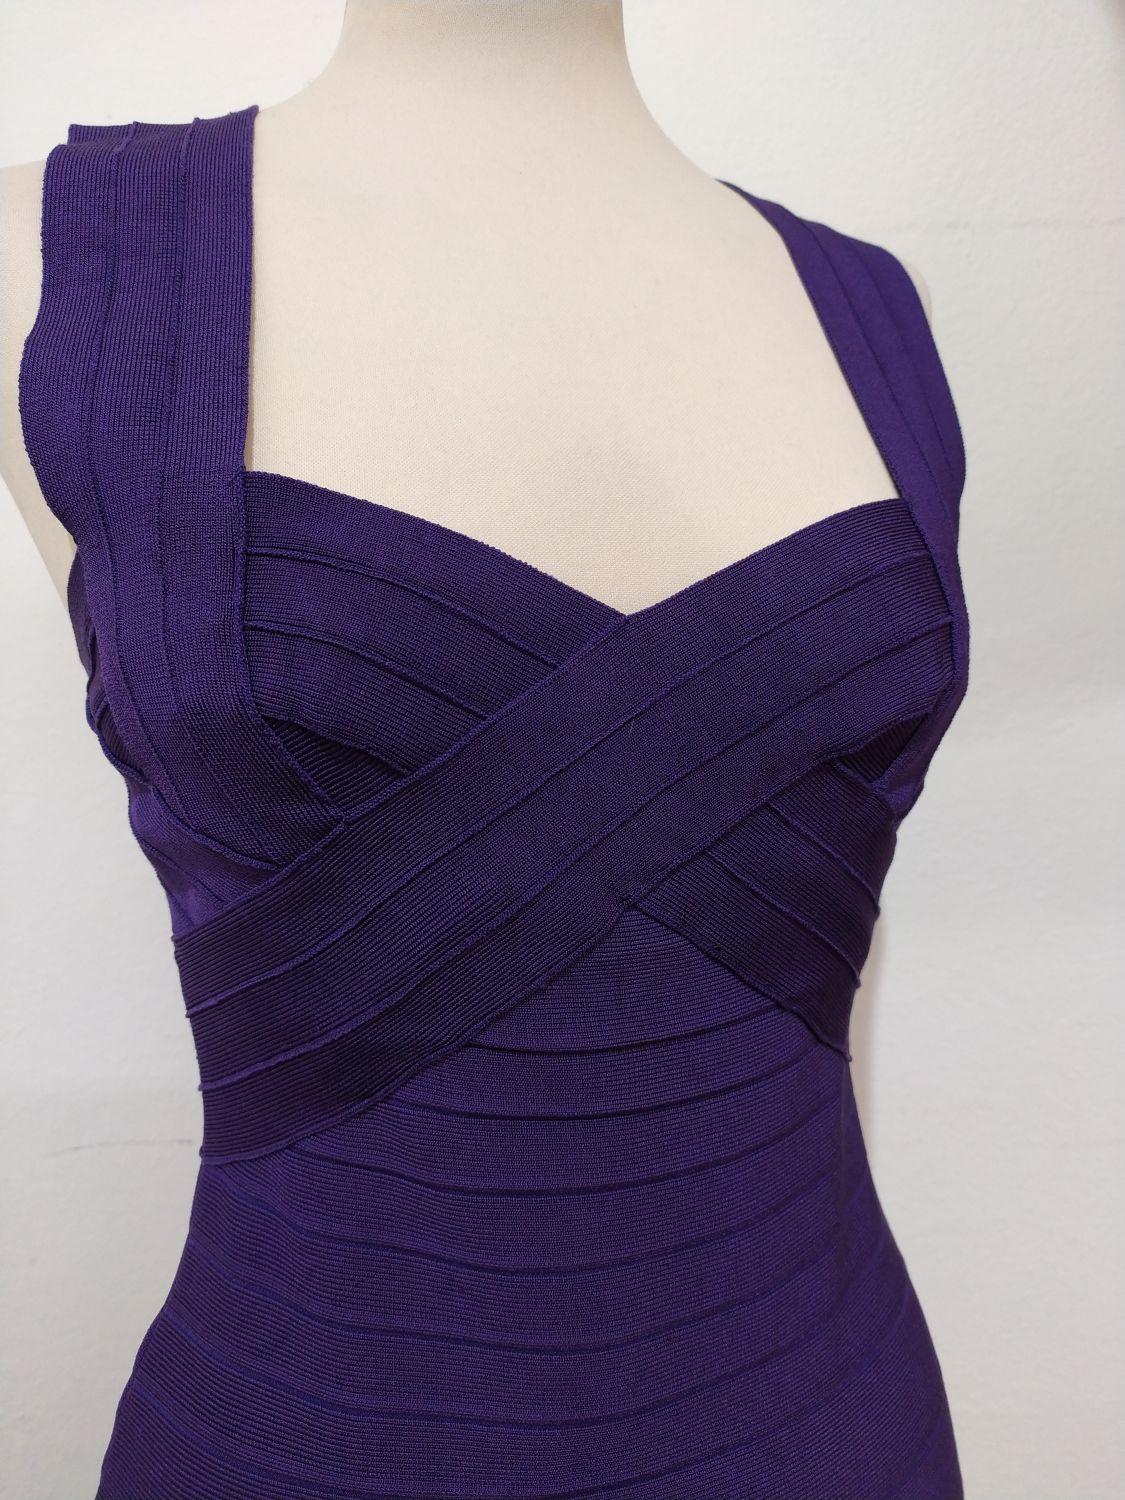 purple herve leger dress